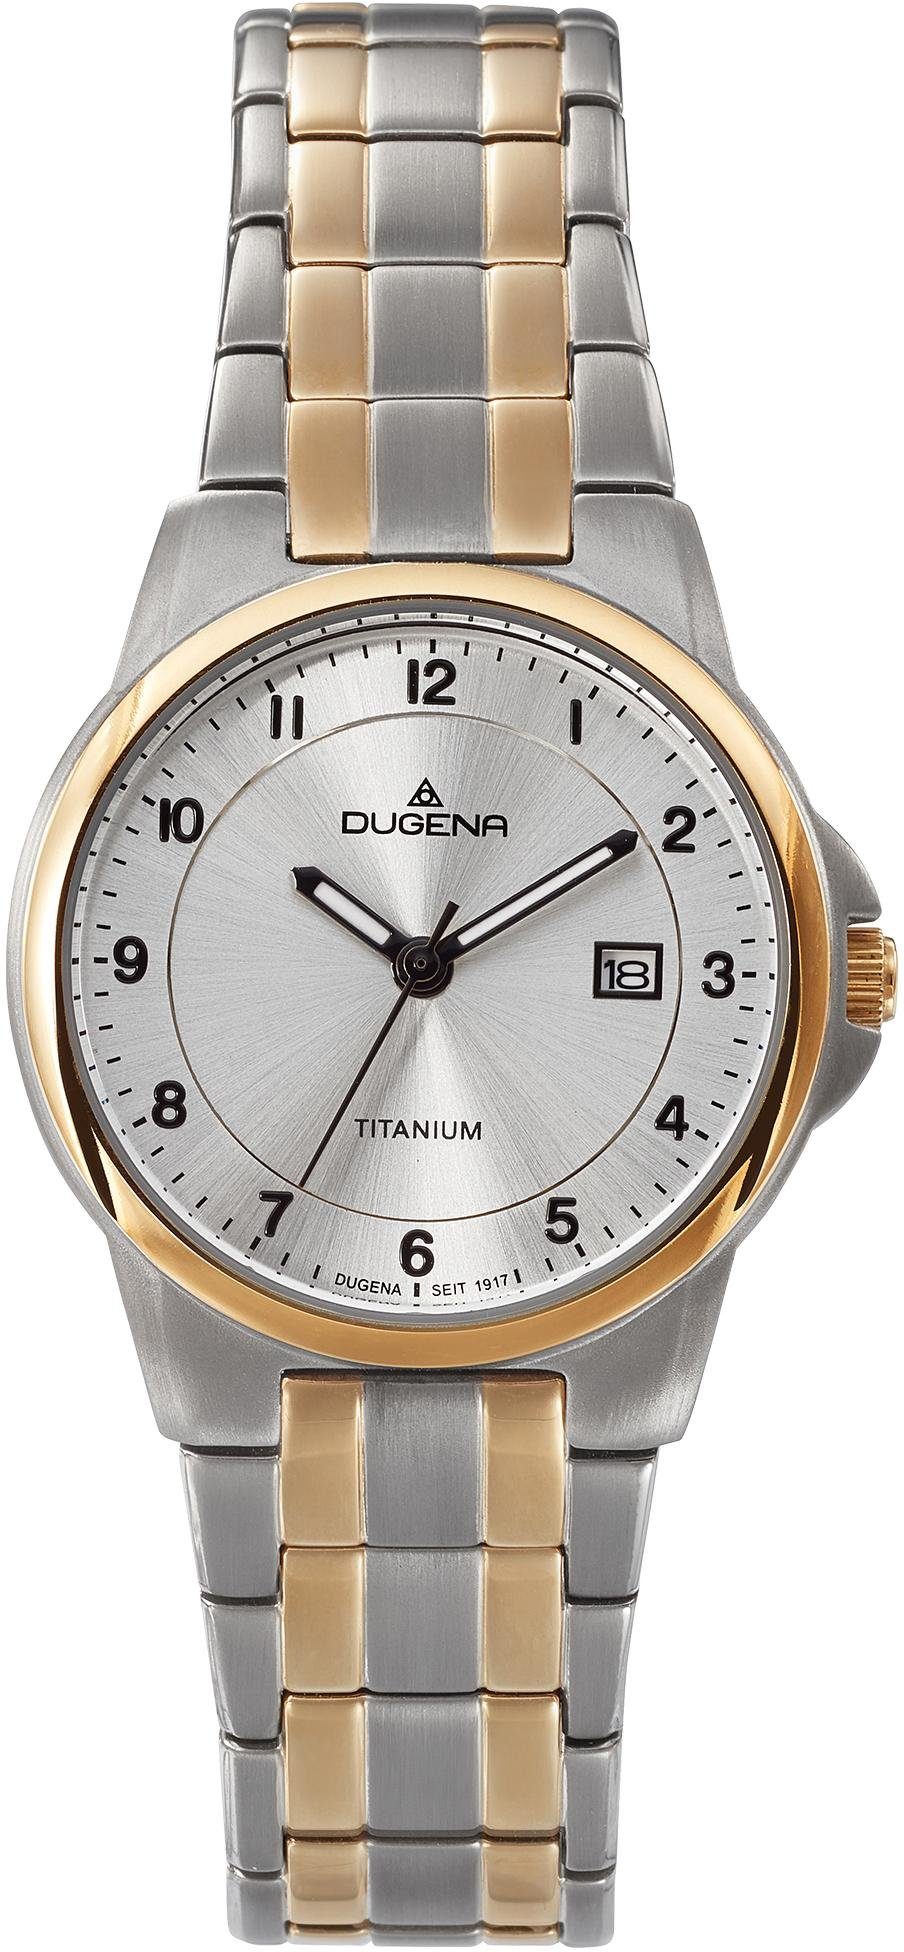 Dugena Titanuhr Gent, 4460915, Armband aus leichtem Titan, bicolor  PVD-beschichtet | Mechanische Uhren